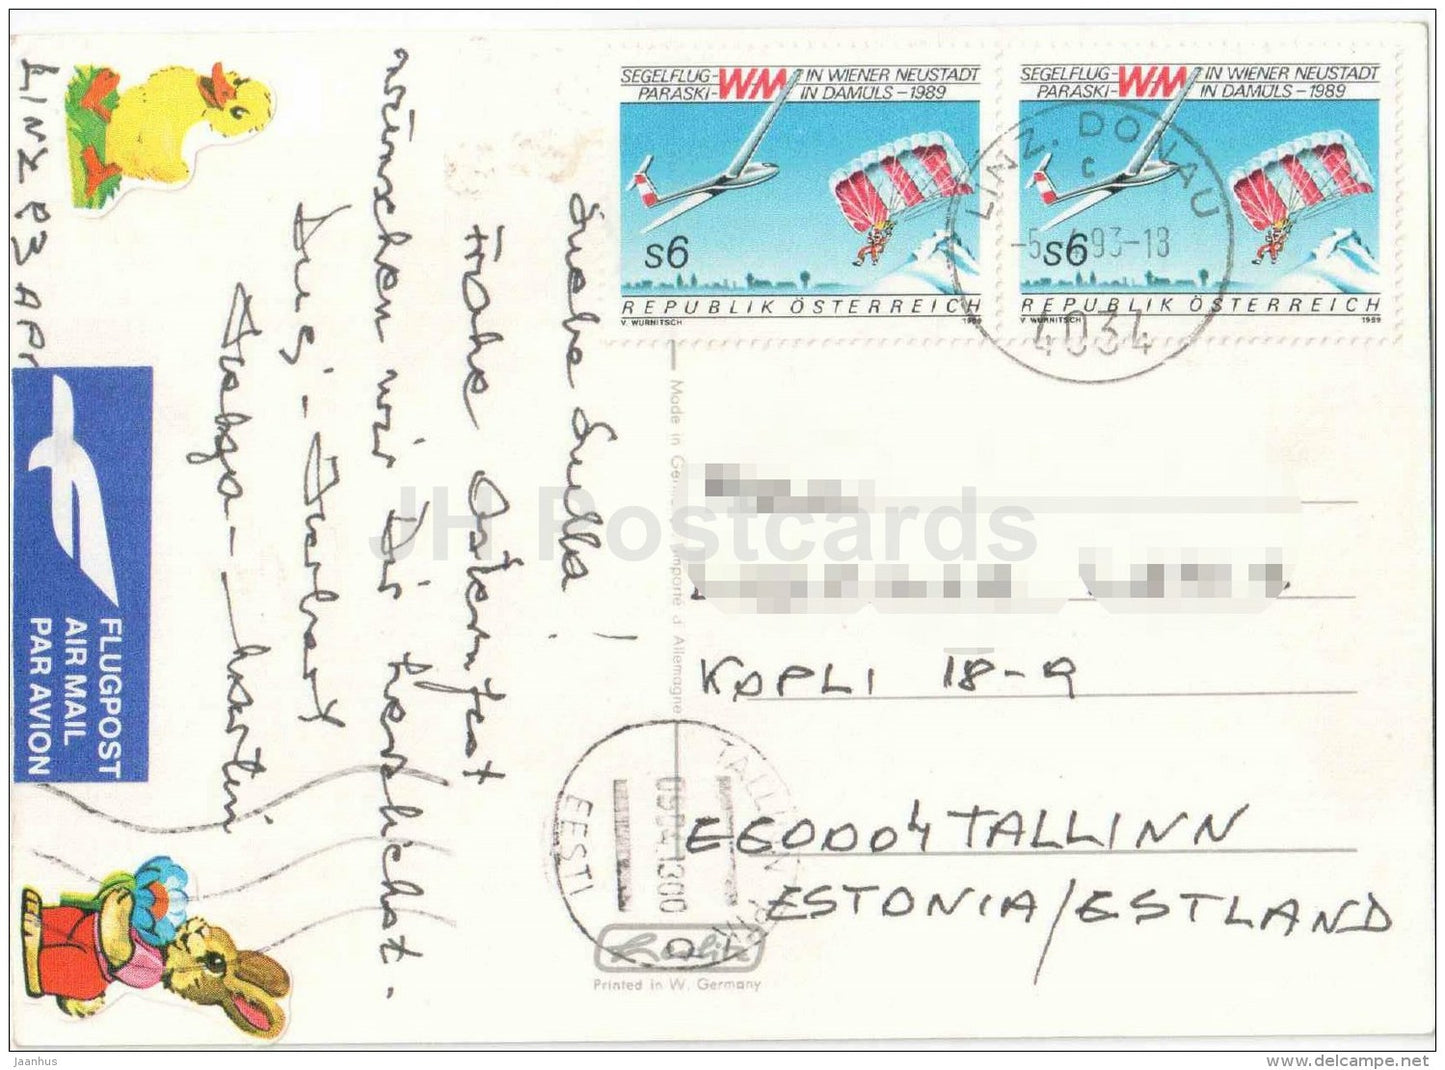 Easter greeting card - Ein frohes Osterfest - eggs - basket - Par Avion - Segelflug - sent from Austria to Estonia 1993 - JH Postcards